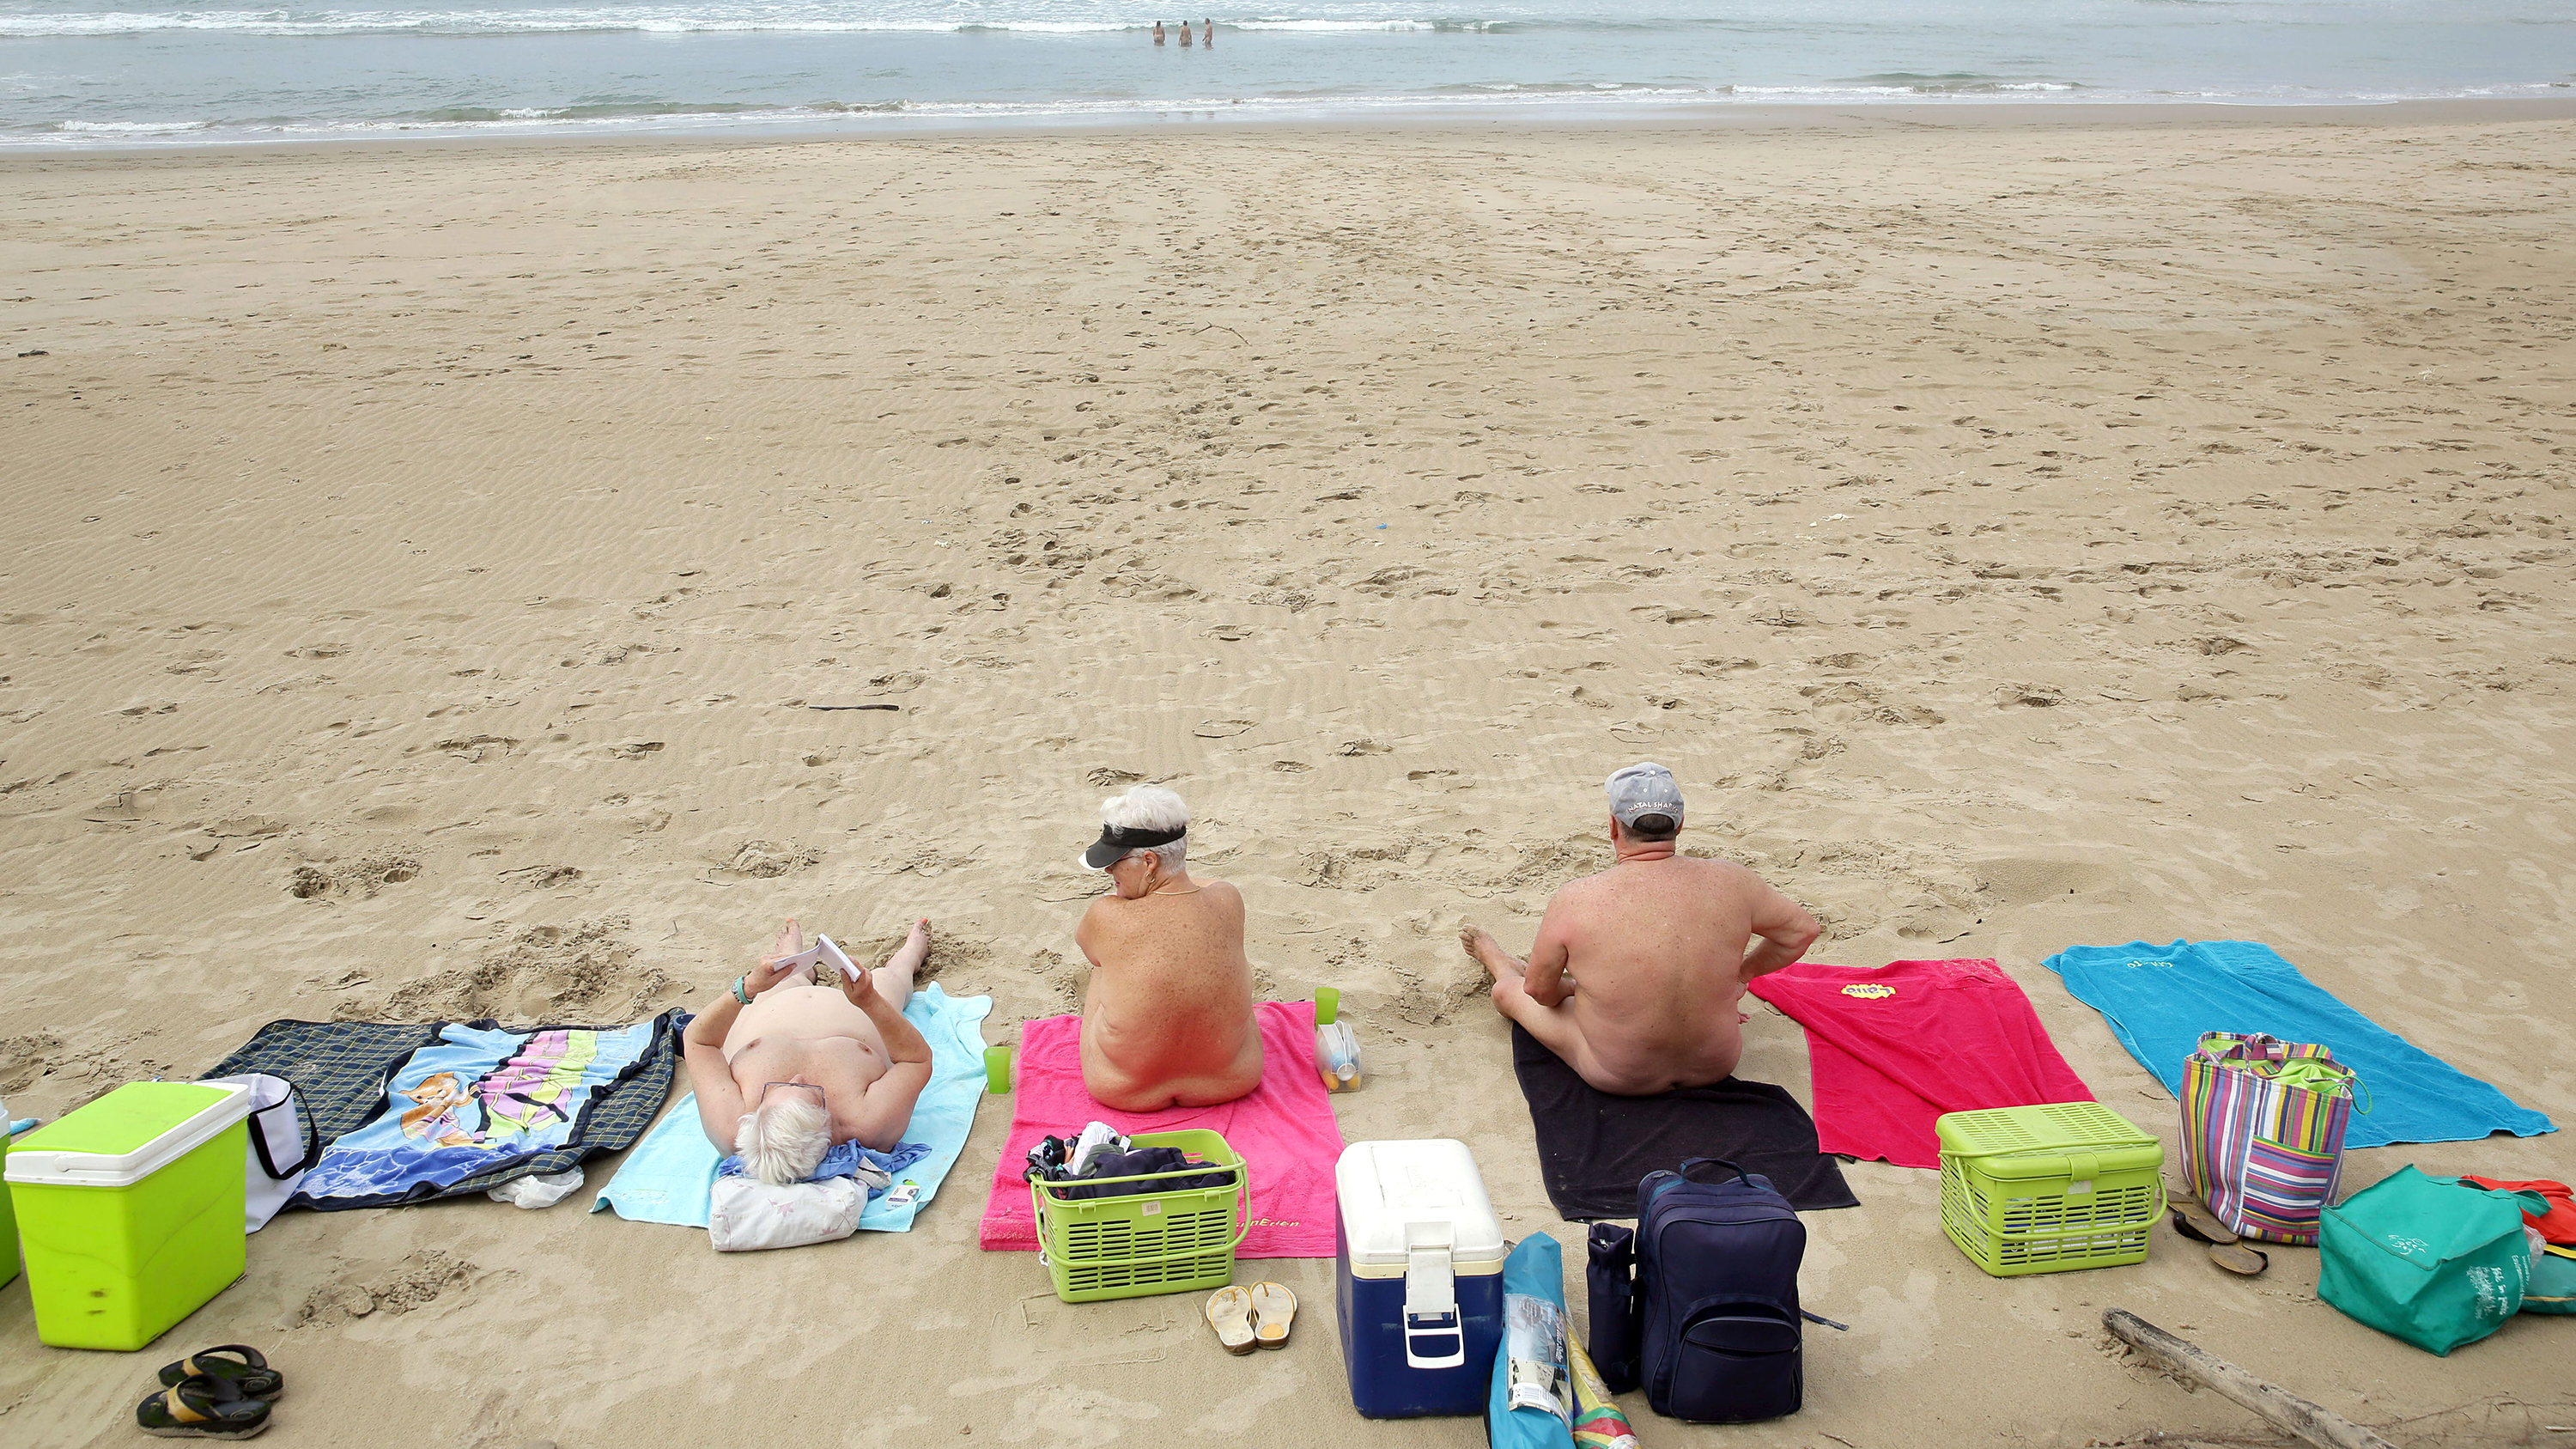 Nude beach nudist